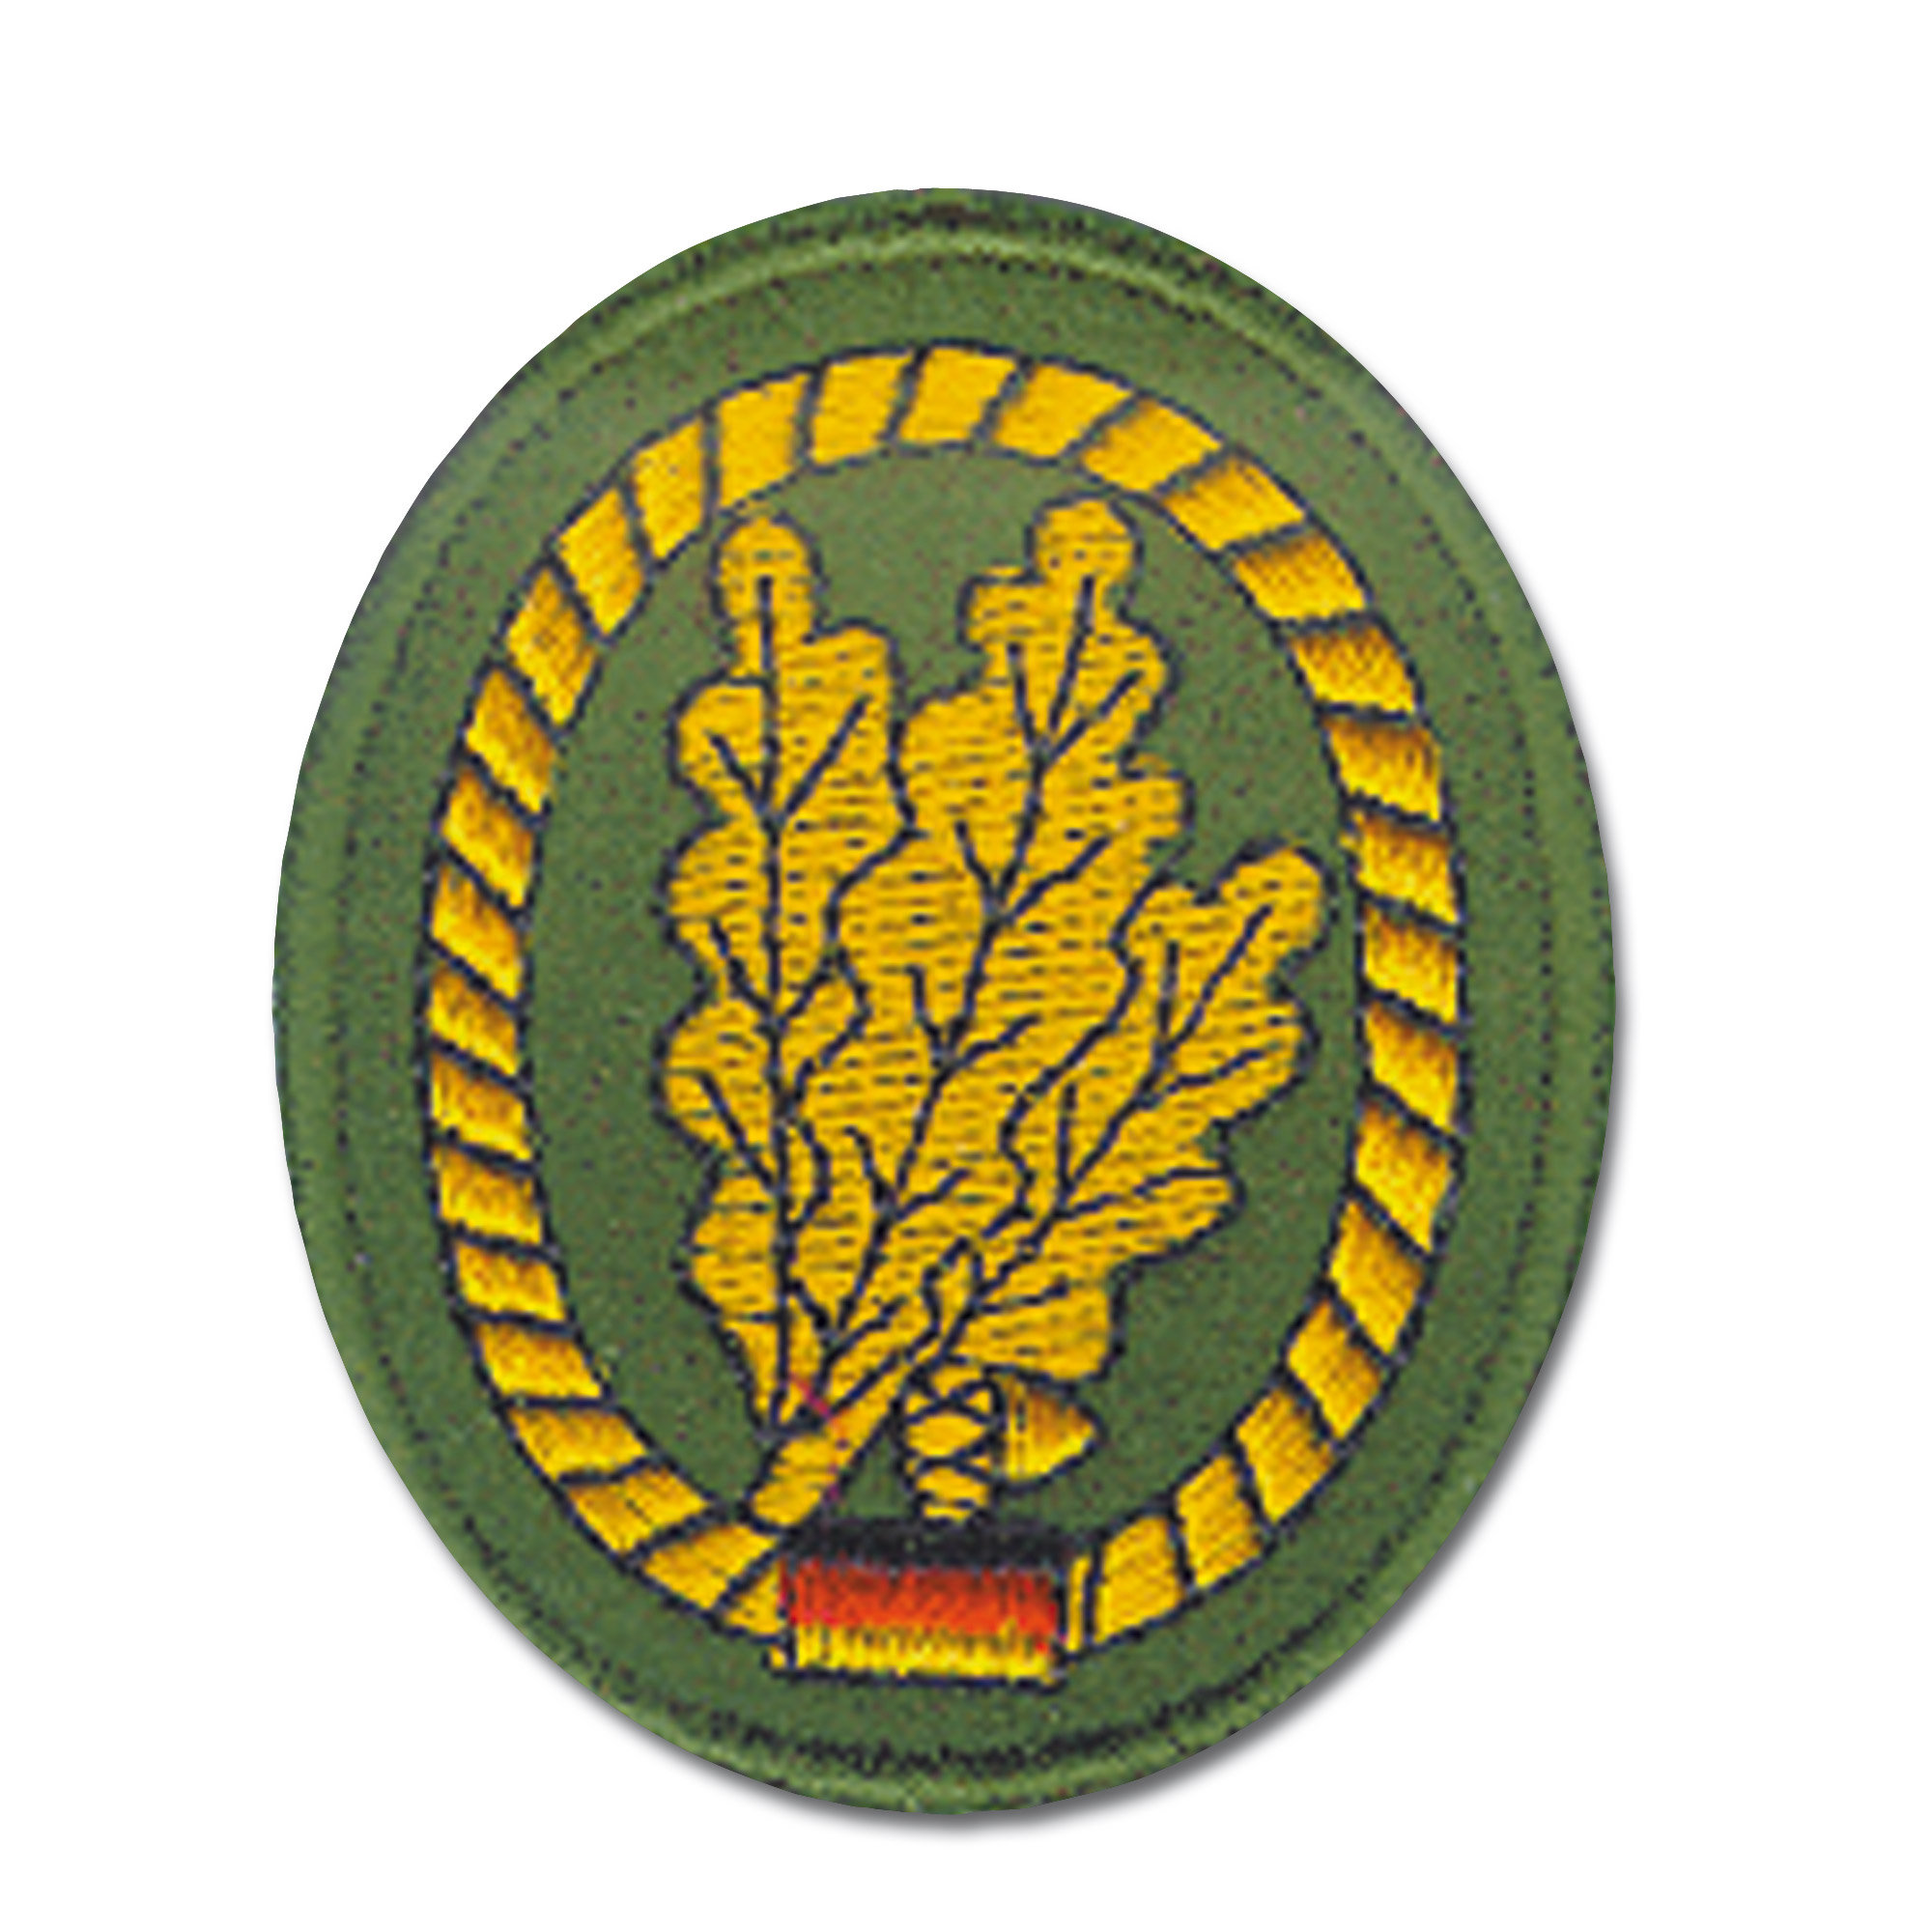 T006 - Badges Das Jägertruppe PDF, PDF, Divisão (militar)